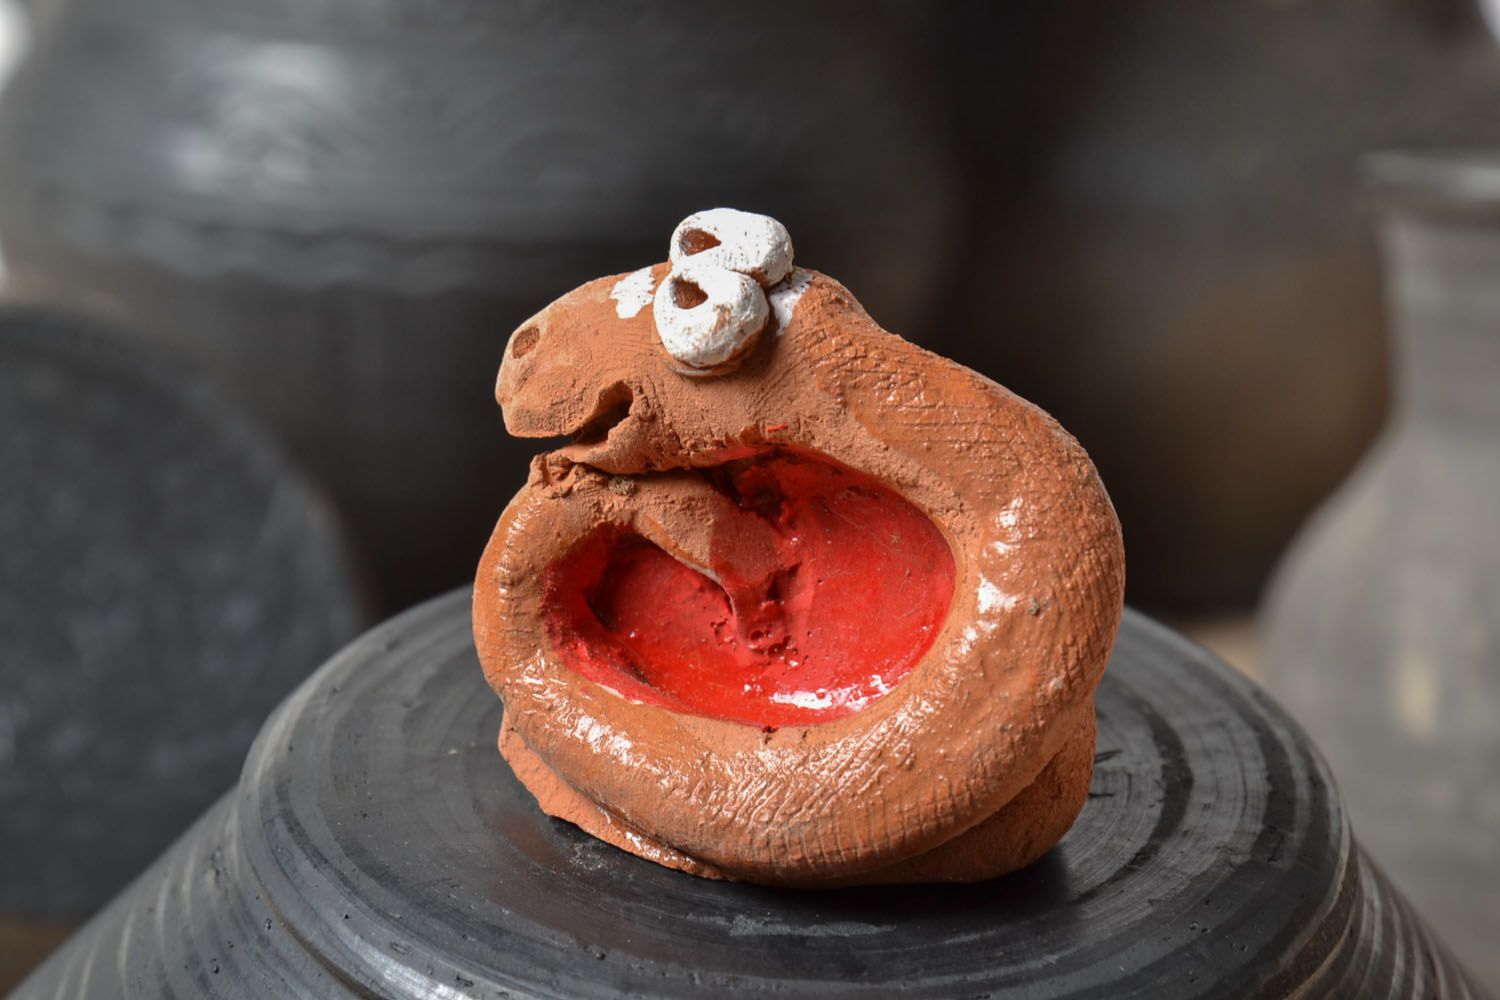 Statuetta serpente in argilla fatta a mano figurina decorativa in ceramica 
 foto 1